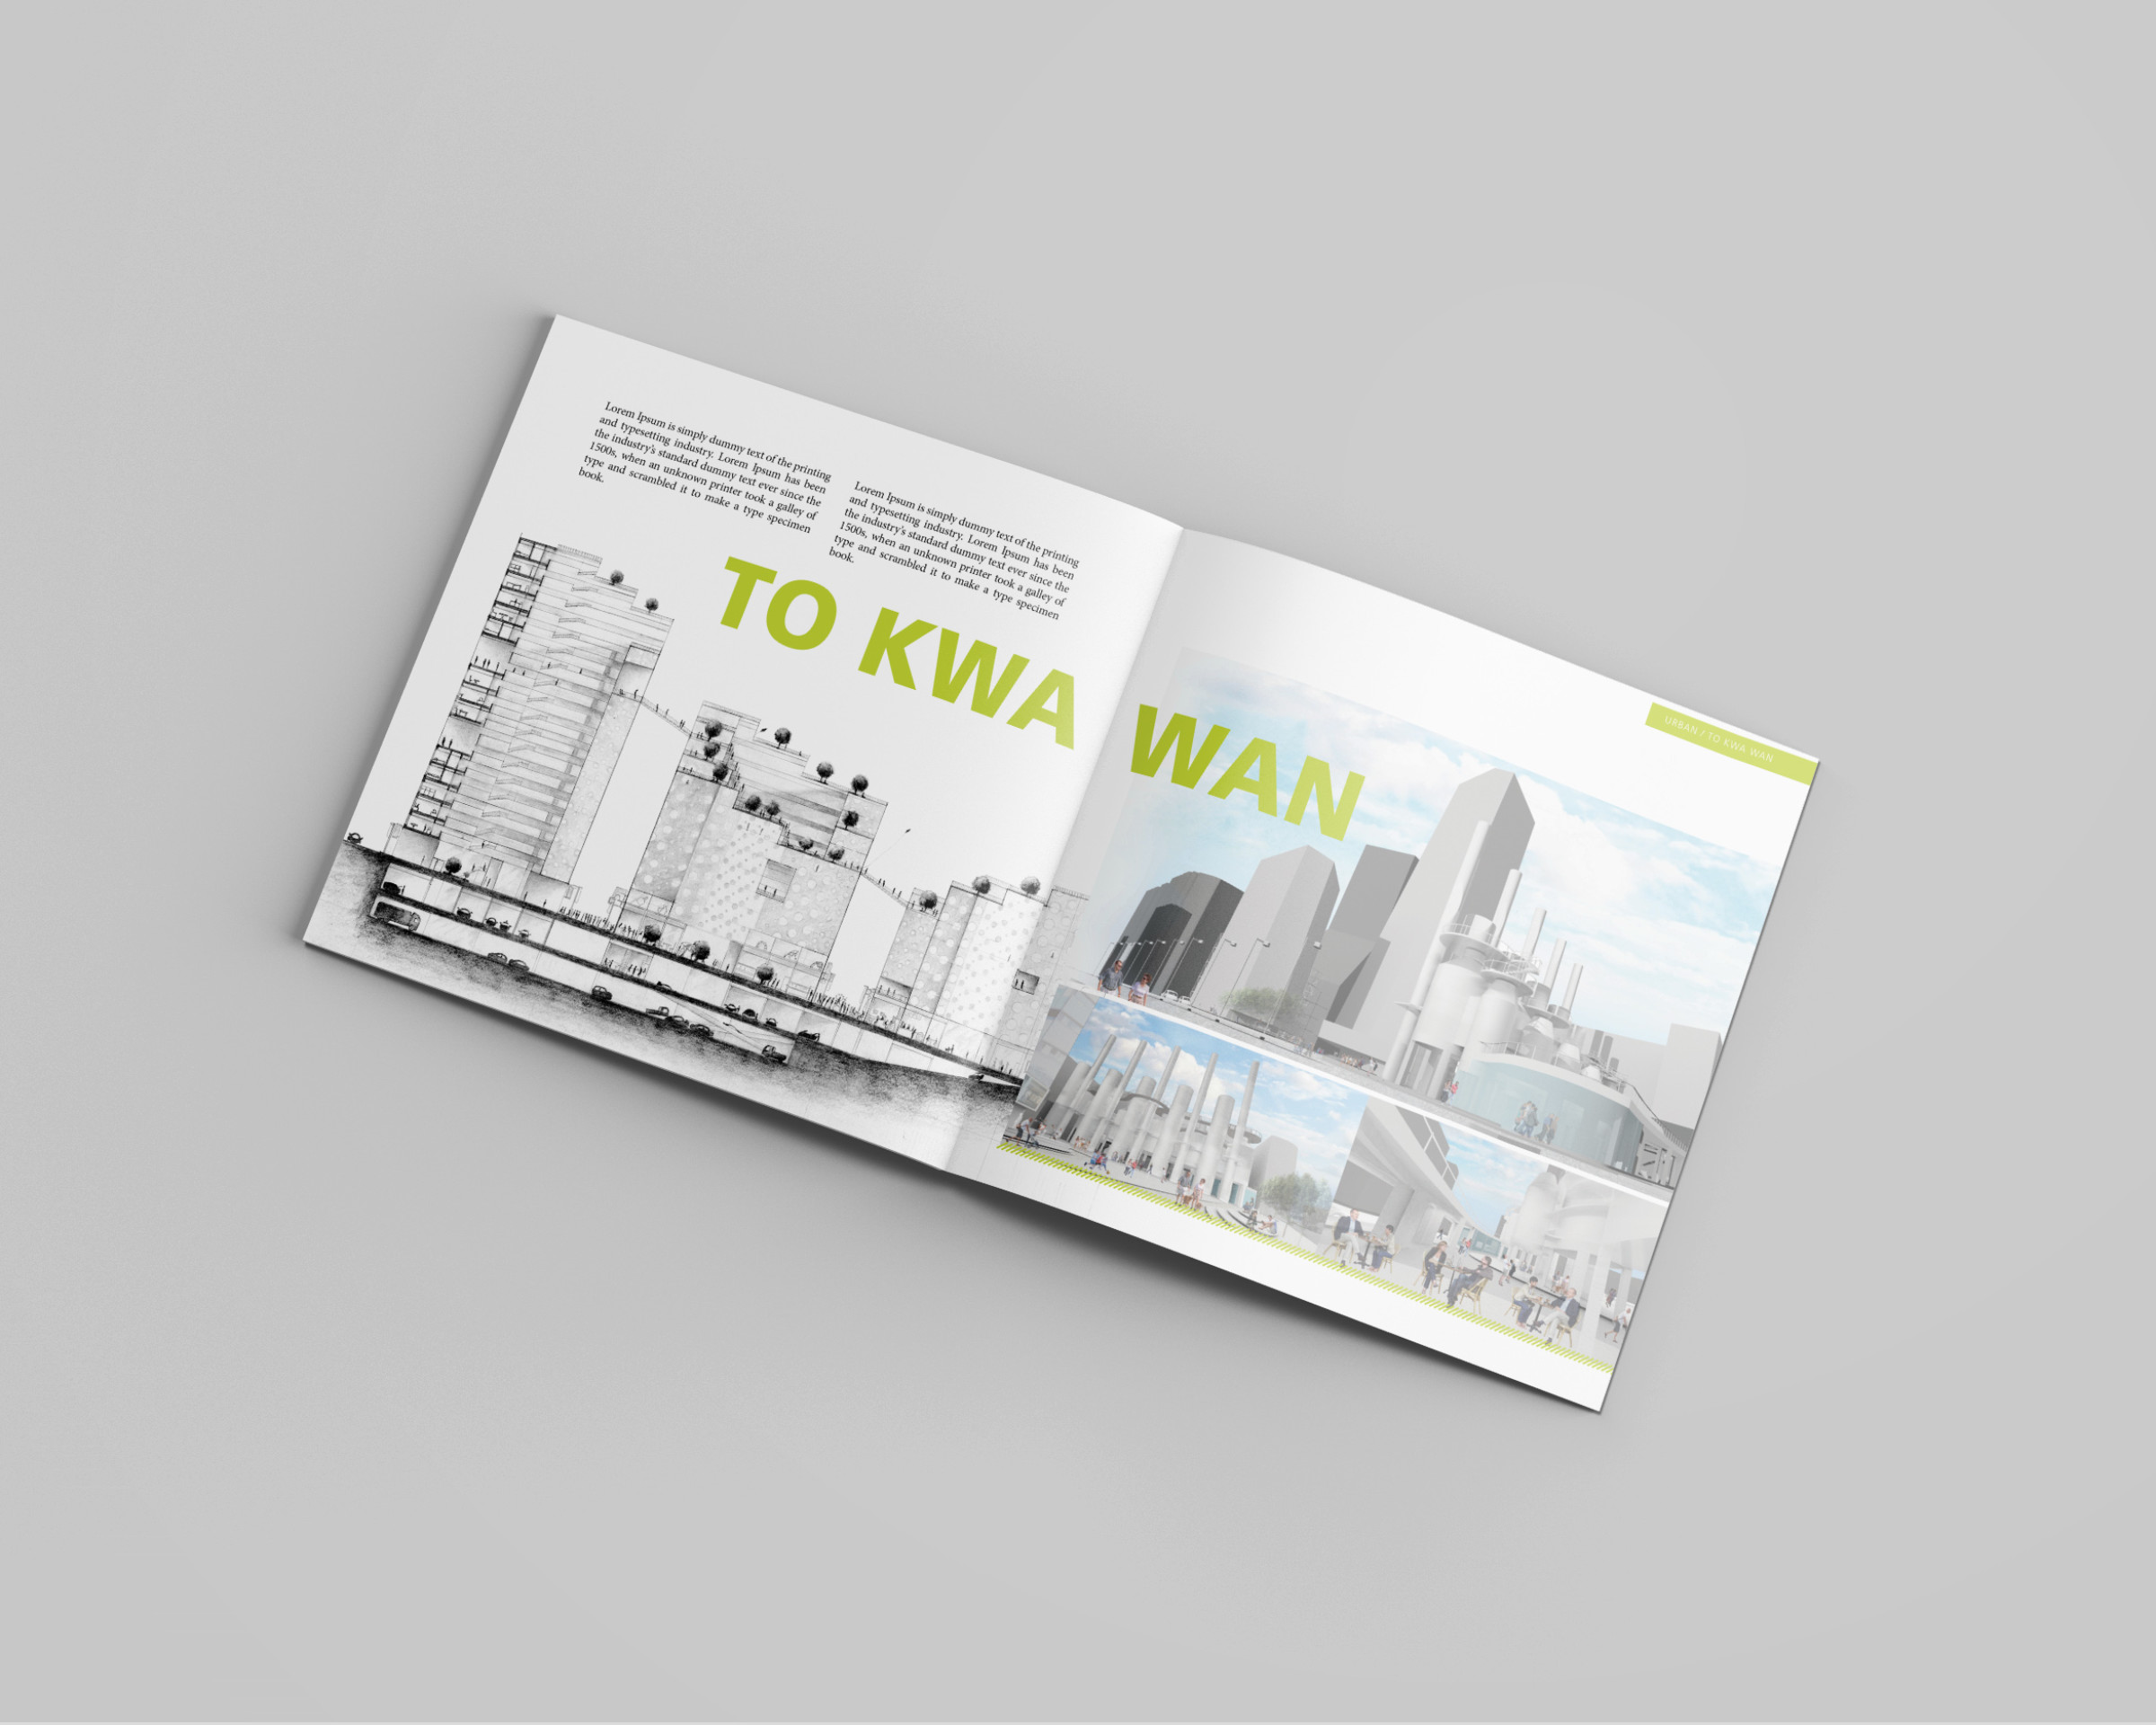 HKDI architecture division showcase book design Hong Kong